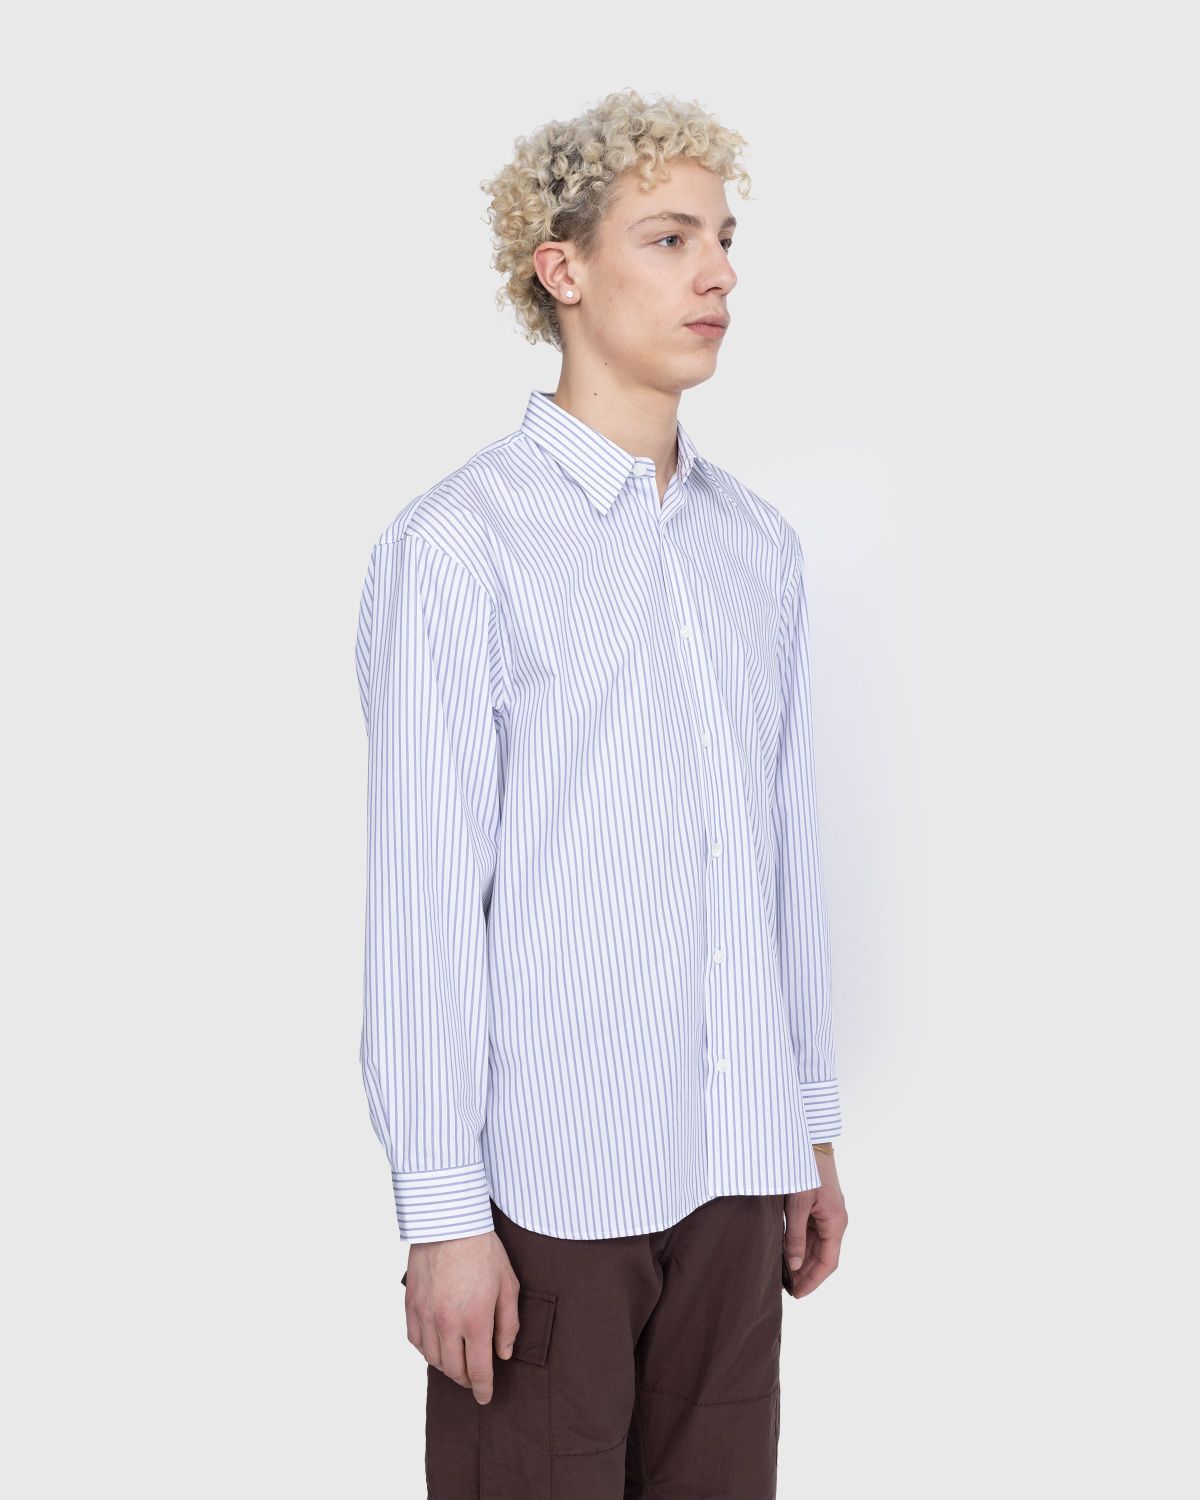 Dries van Noten – Croom Shirt Striped White - Longsleeve Shirts - White - Image 4